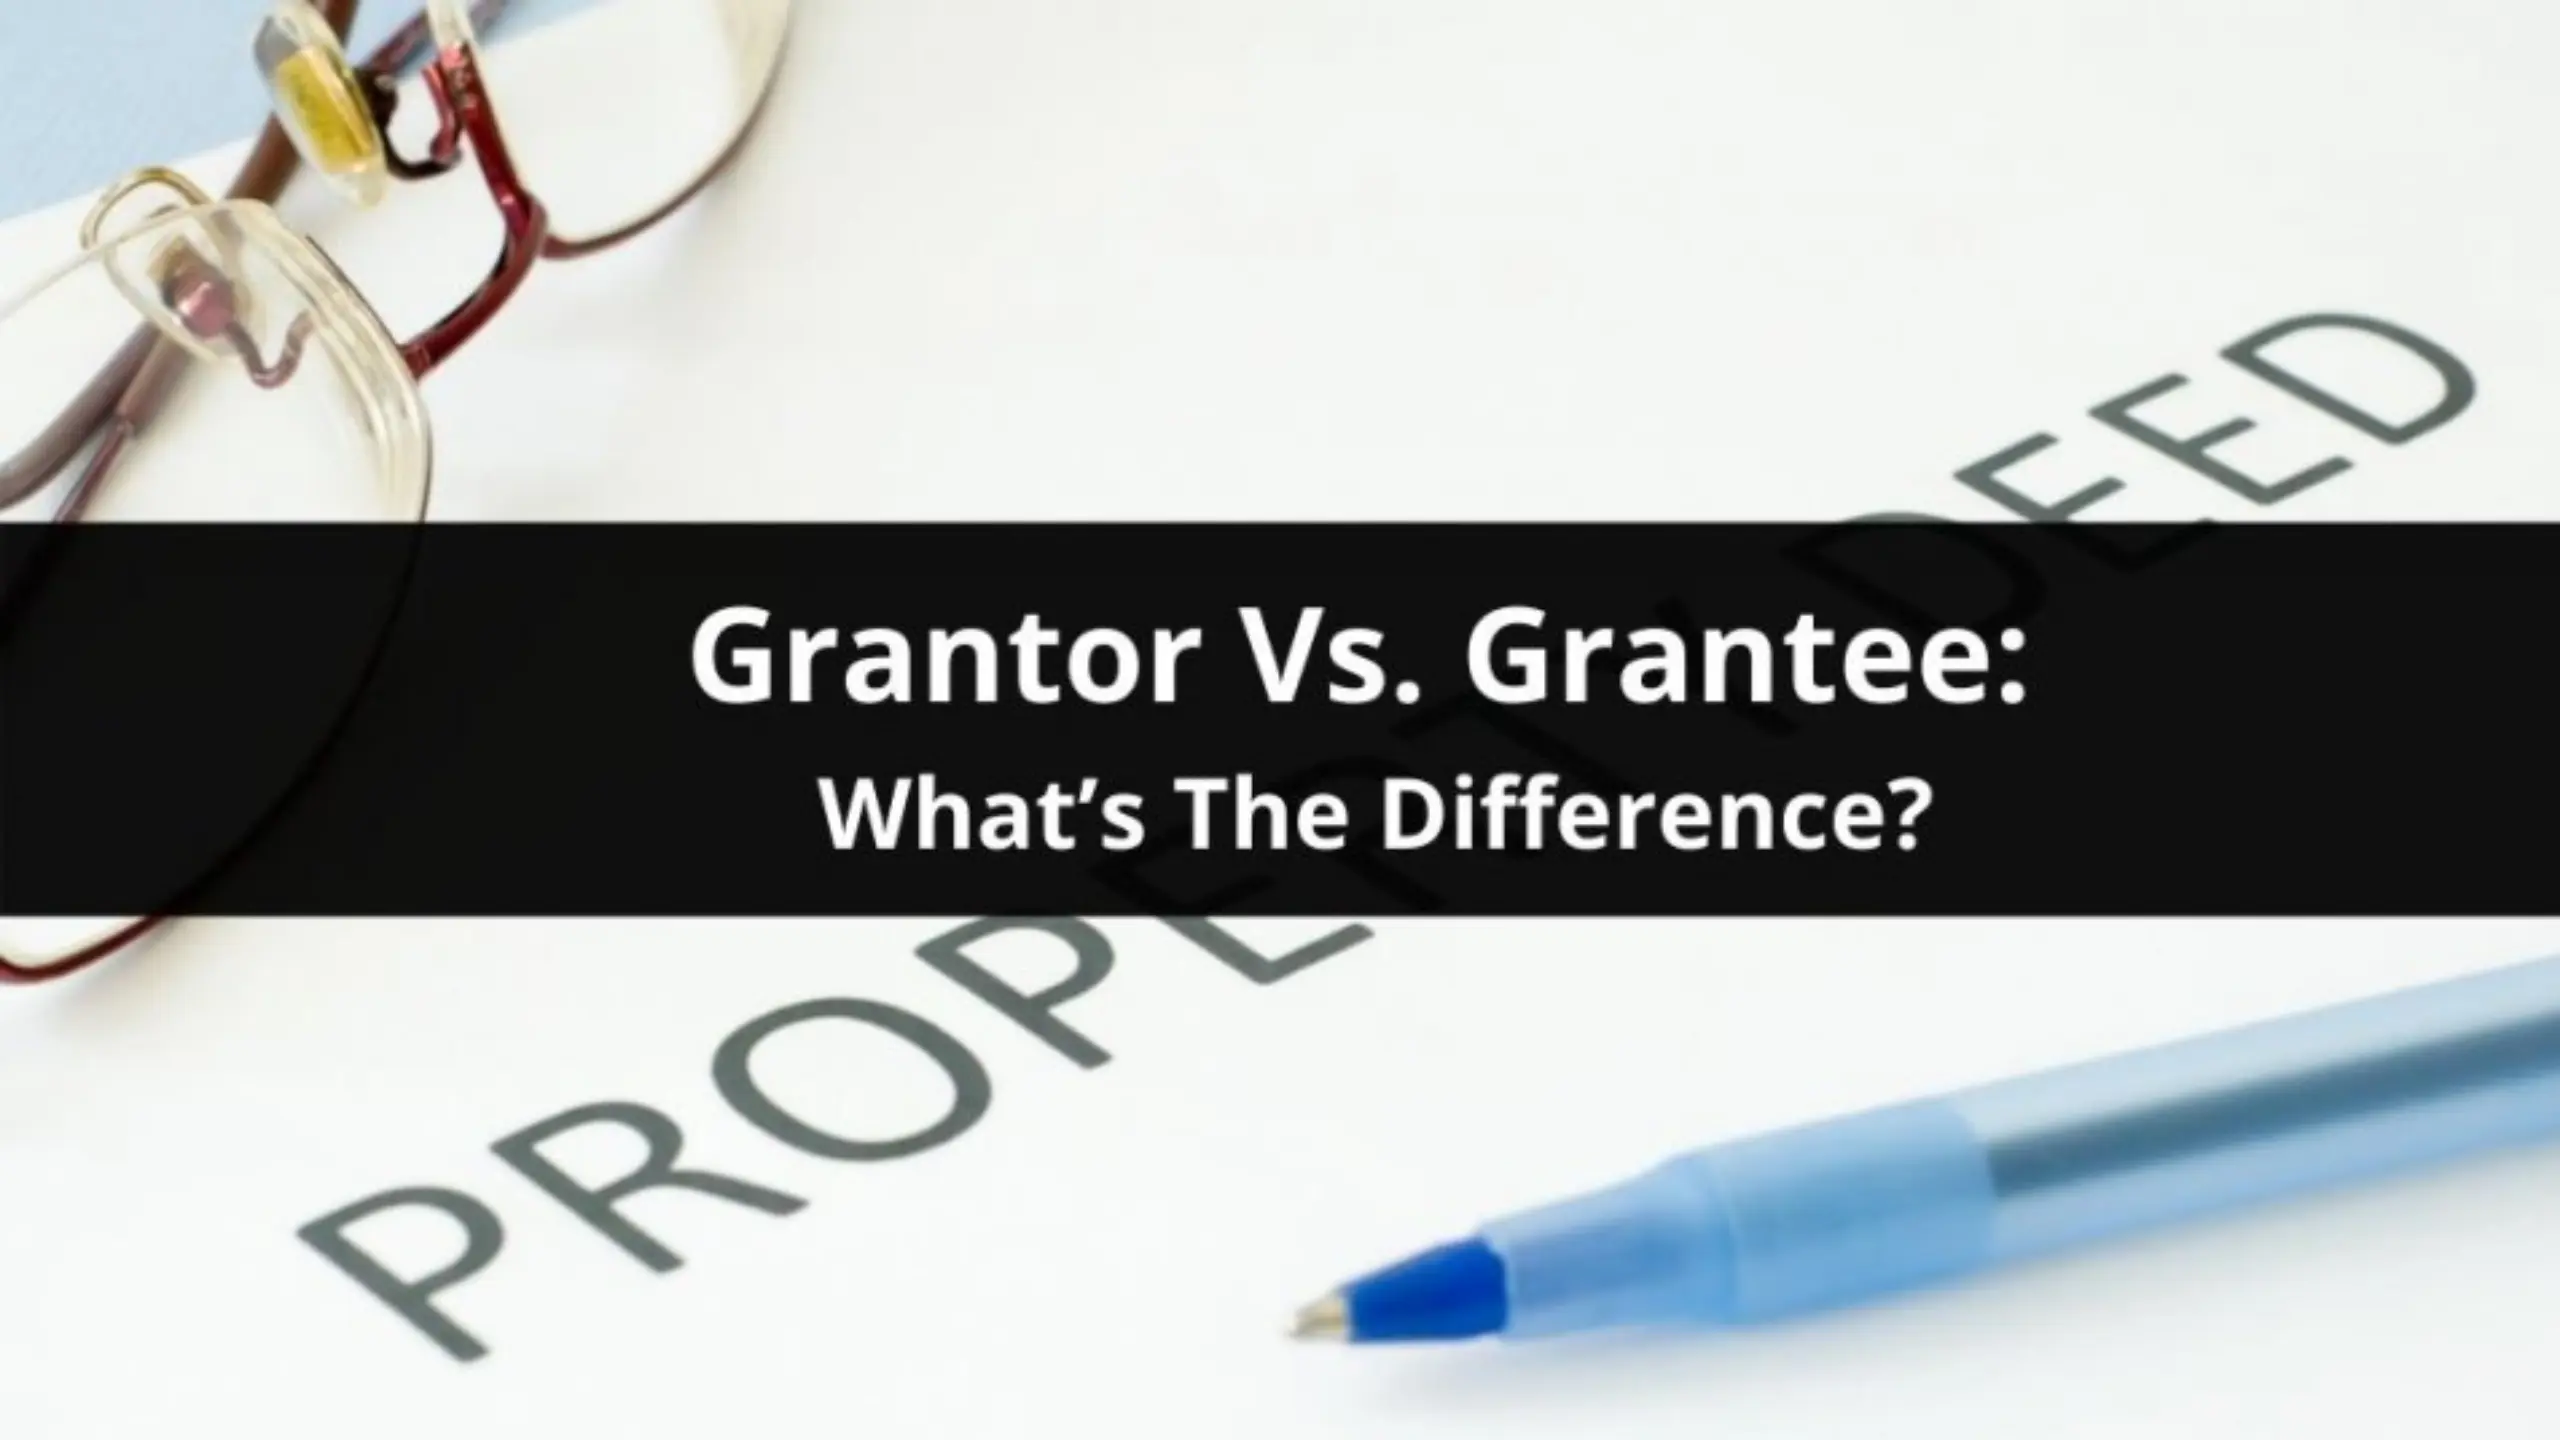 Grantor vs Grantee in Real Estate